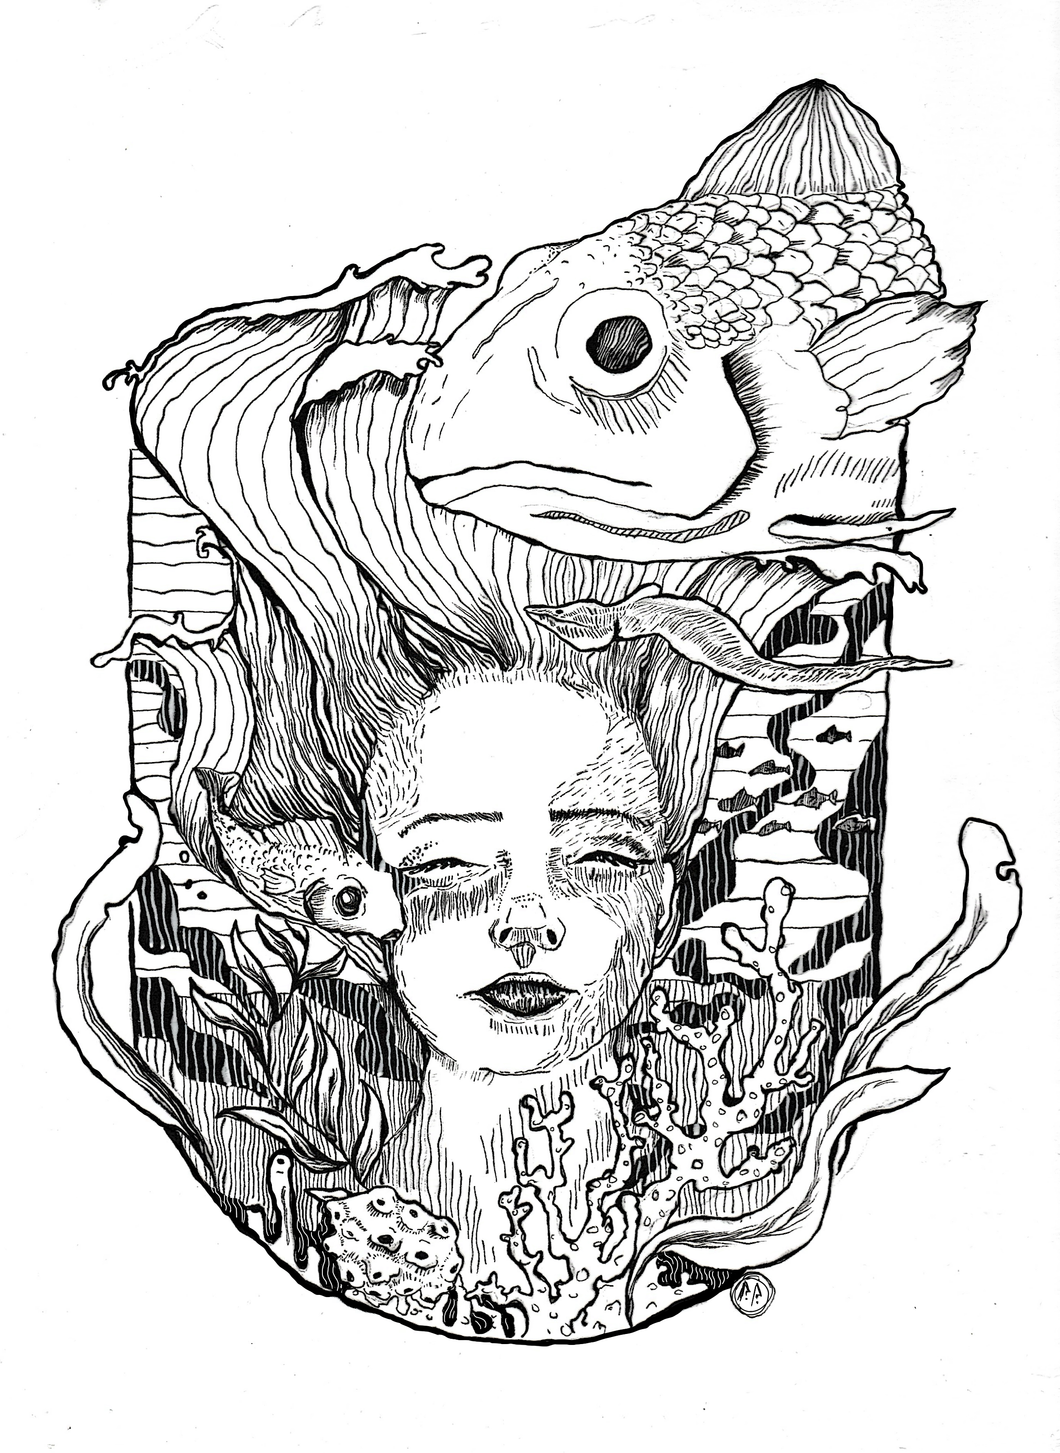 Underwater dream- dreamy sea portrait - Print on paper